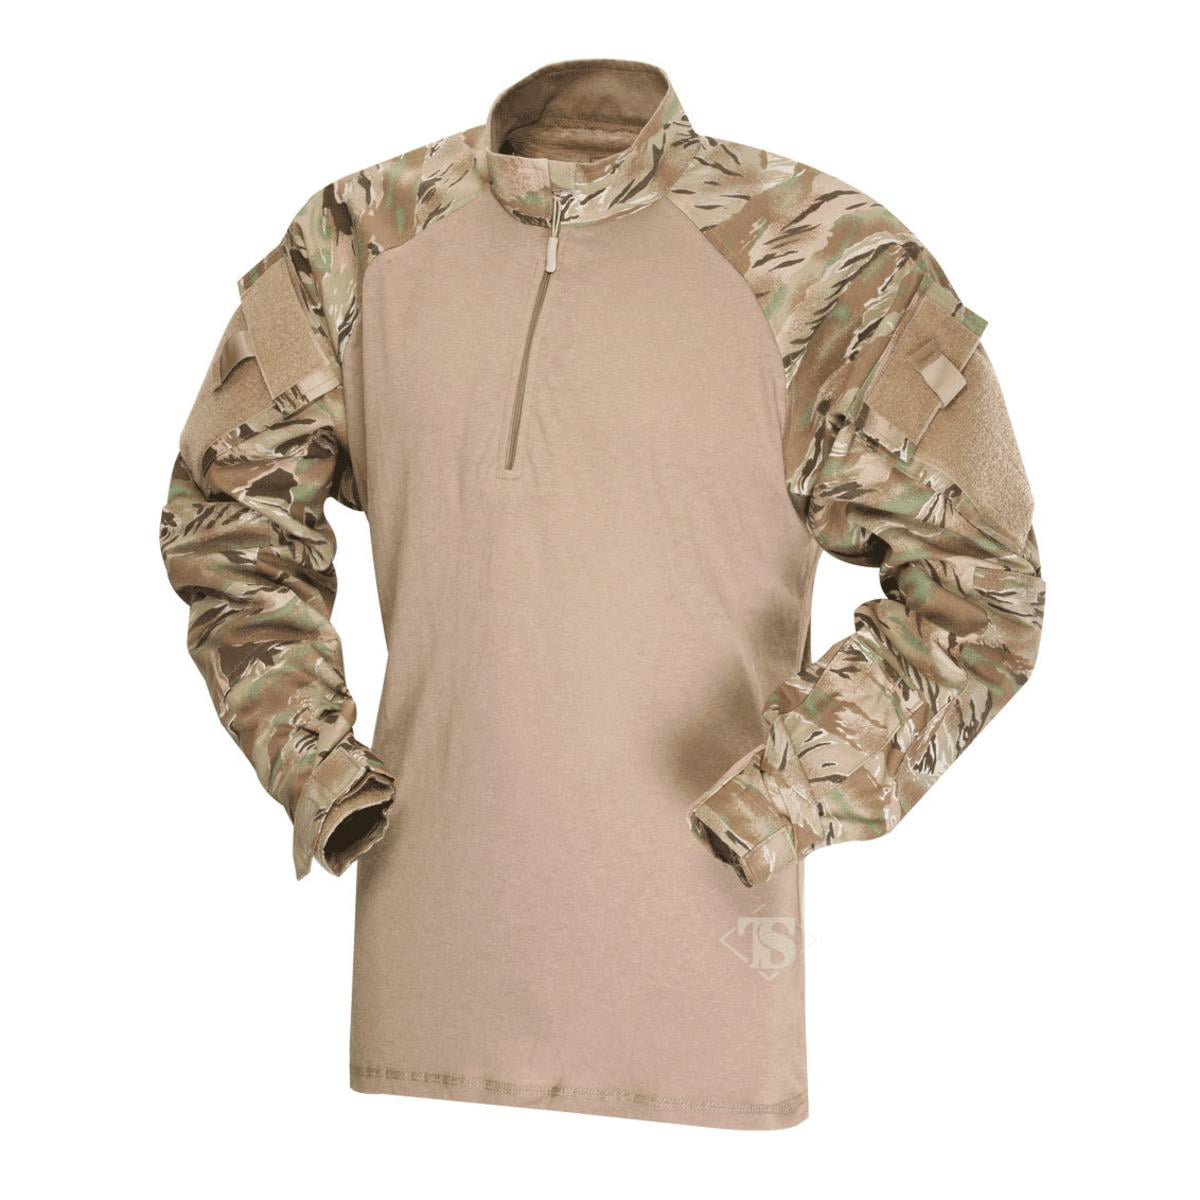 All Terrain Tiger Stripe Camo Tactical Response Uniform Shirt by TRU-SPEC 1262 